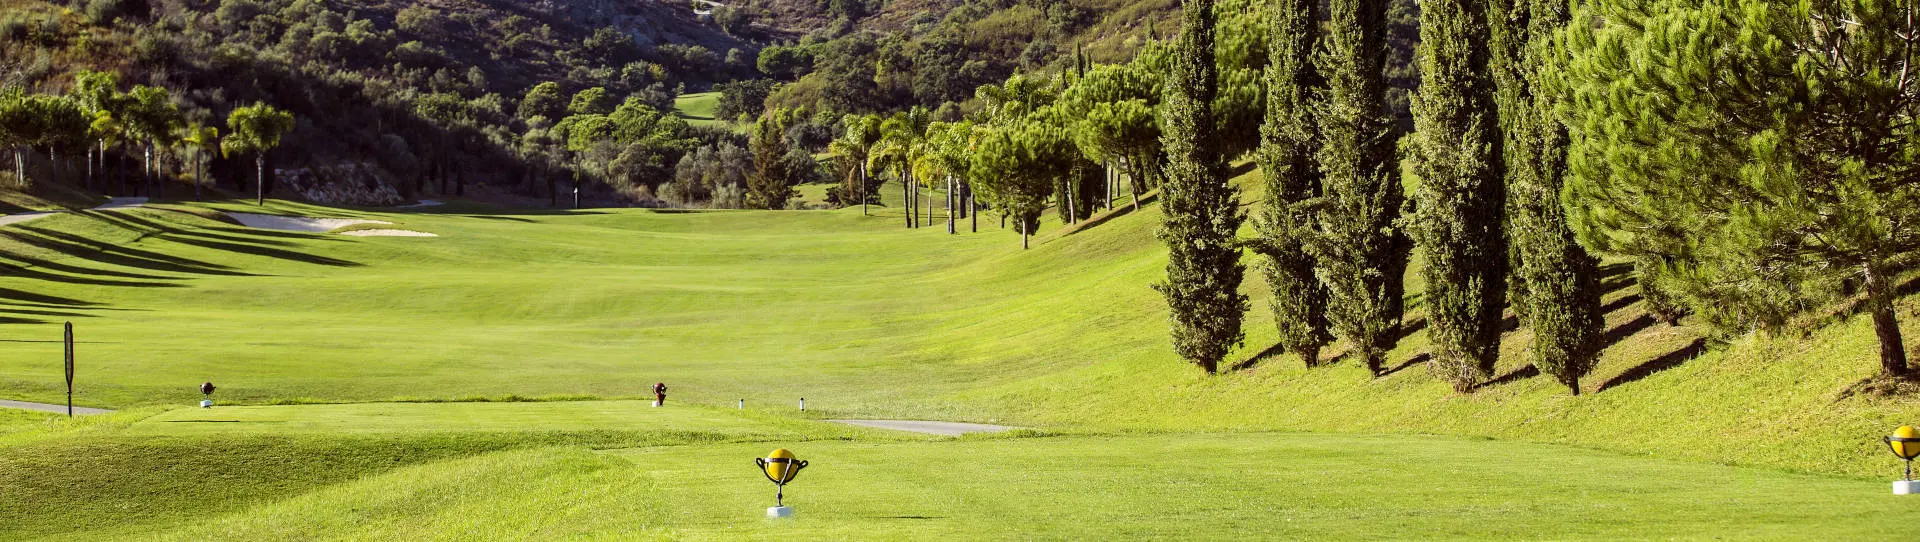 Spain golf holidays - Villa Padierna 7 Rounds Golf Pack - Photo 3